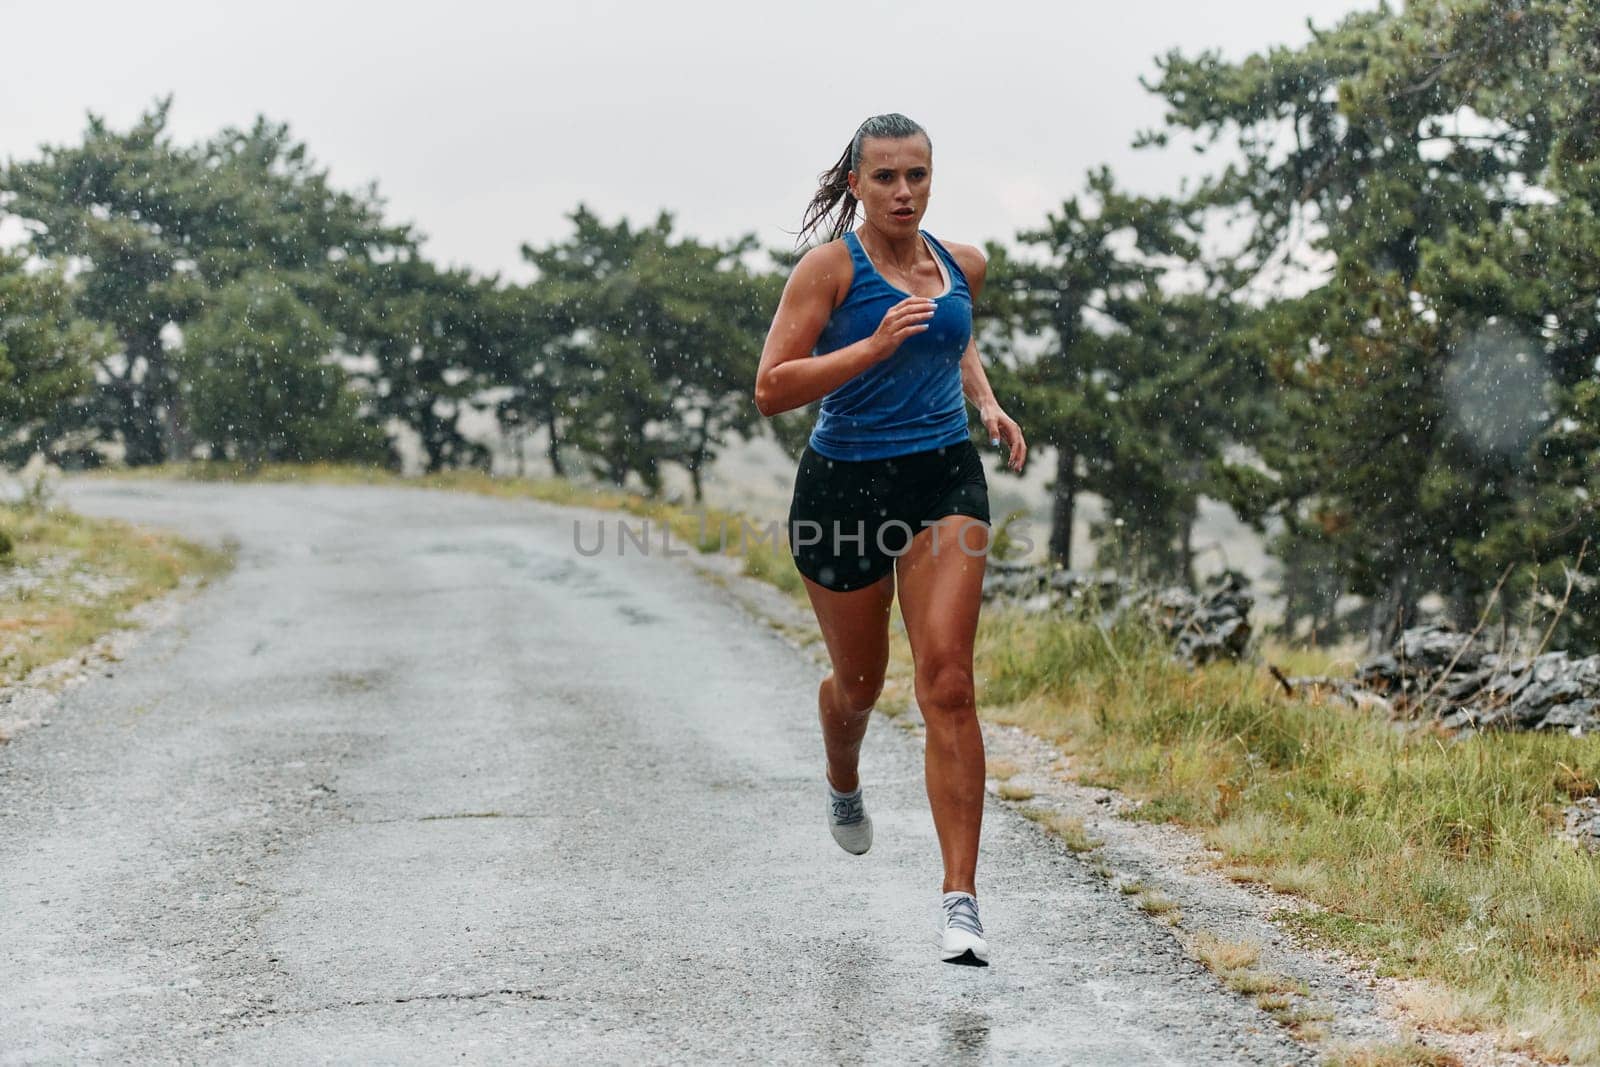 Rain or shine, a dedicated marathoner powers through her training run, her eyes set on the finish line.